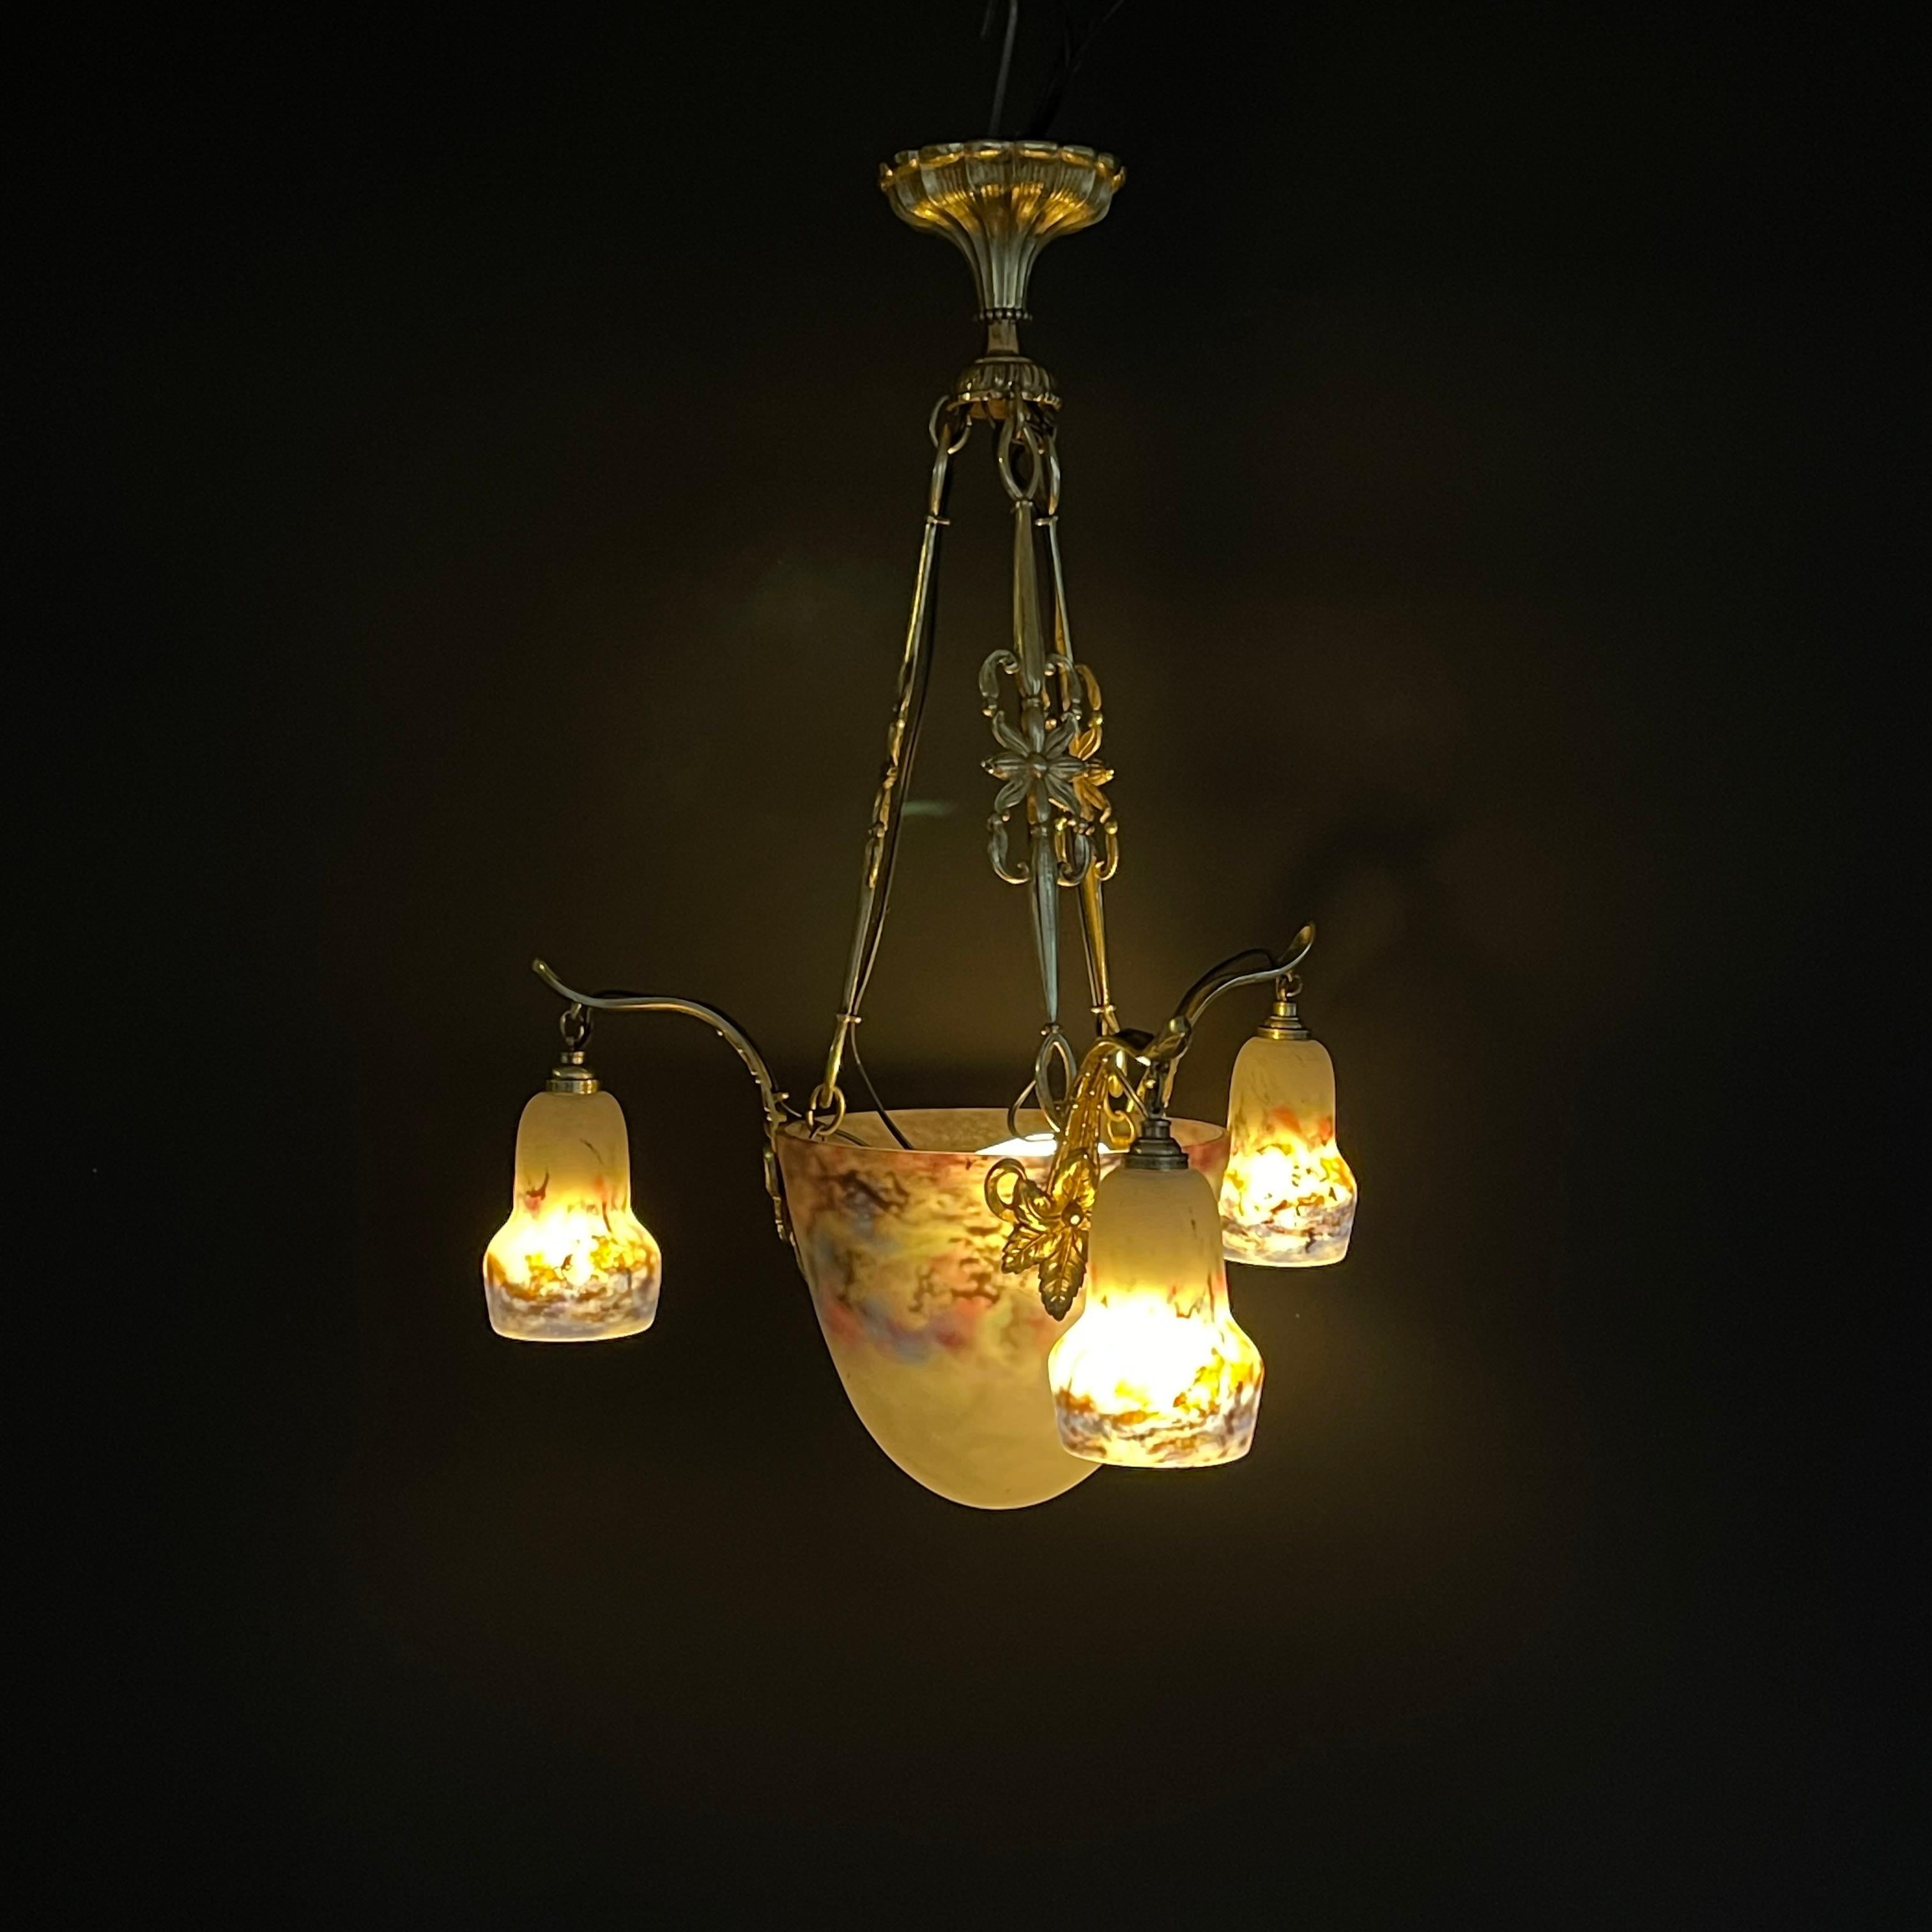 ART DECO chandelier pate de verre by Muller Fres & Bronze by Petitot, 1930s For Sale 6